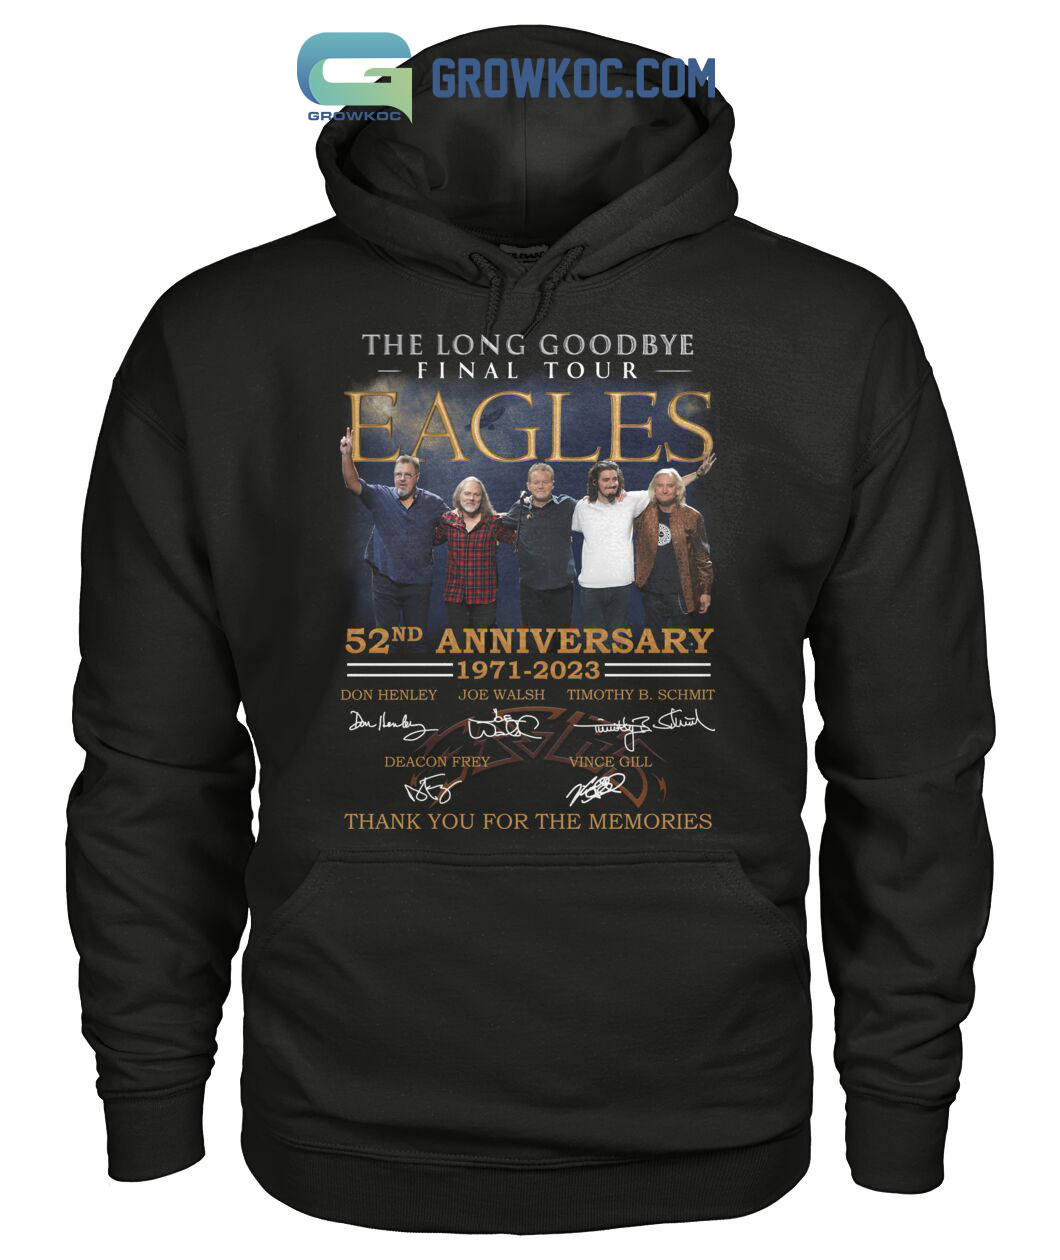 The Long Goodbye Final Tour Eagles 52nd Anniversary Memories T Shirt